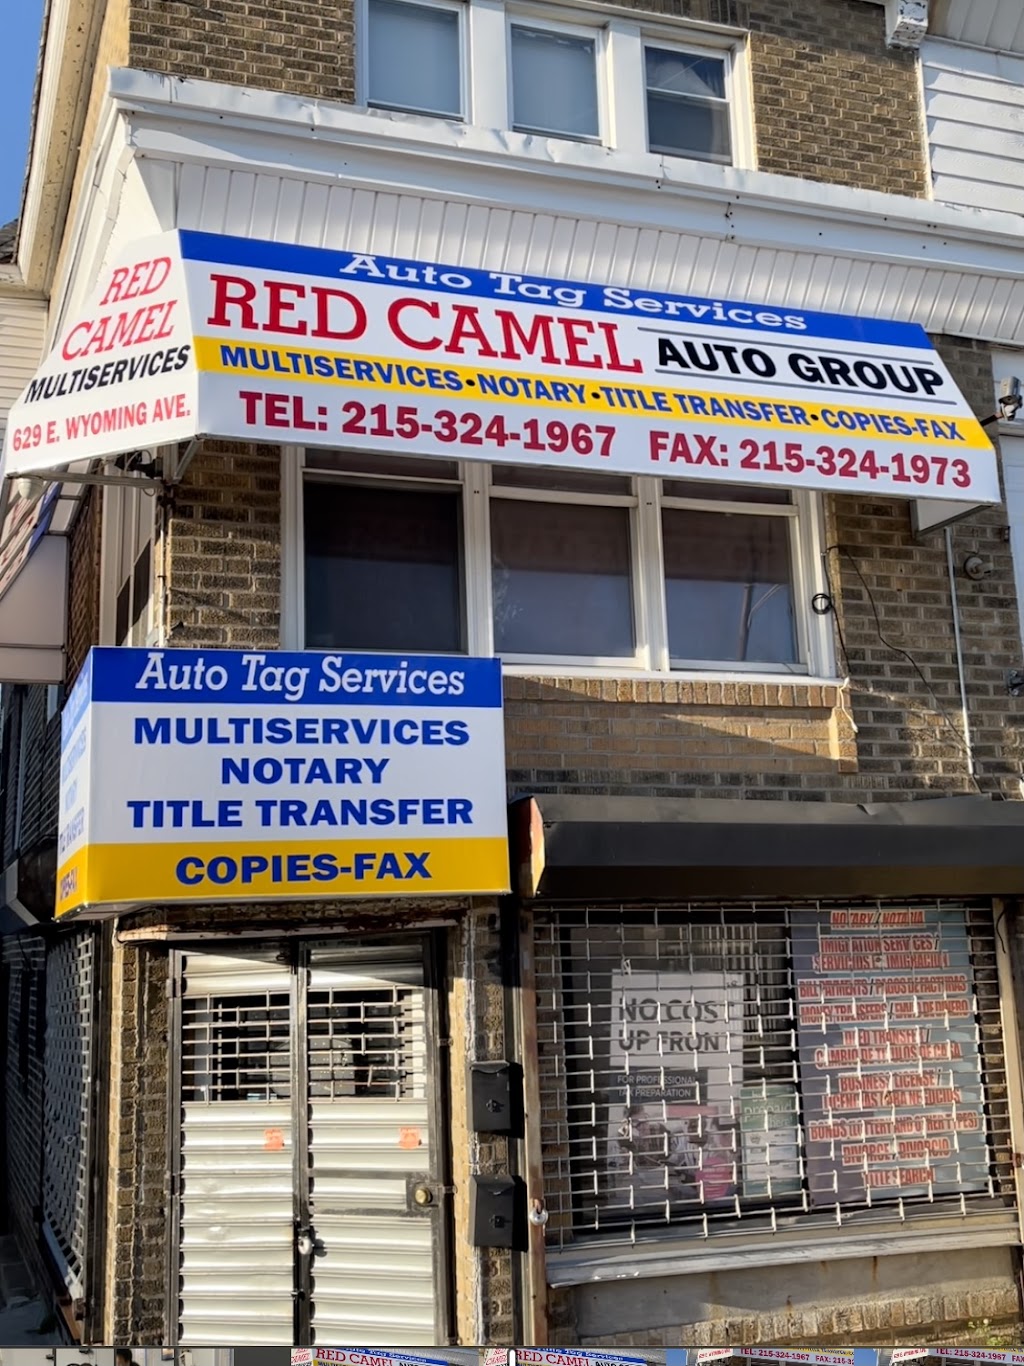 Red Camel Auto Group | 629 E Wyoming Ave, Philadelphia, PA 19120 | Phone: (215) 324-1967